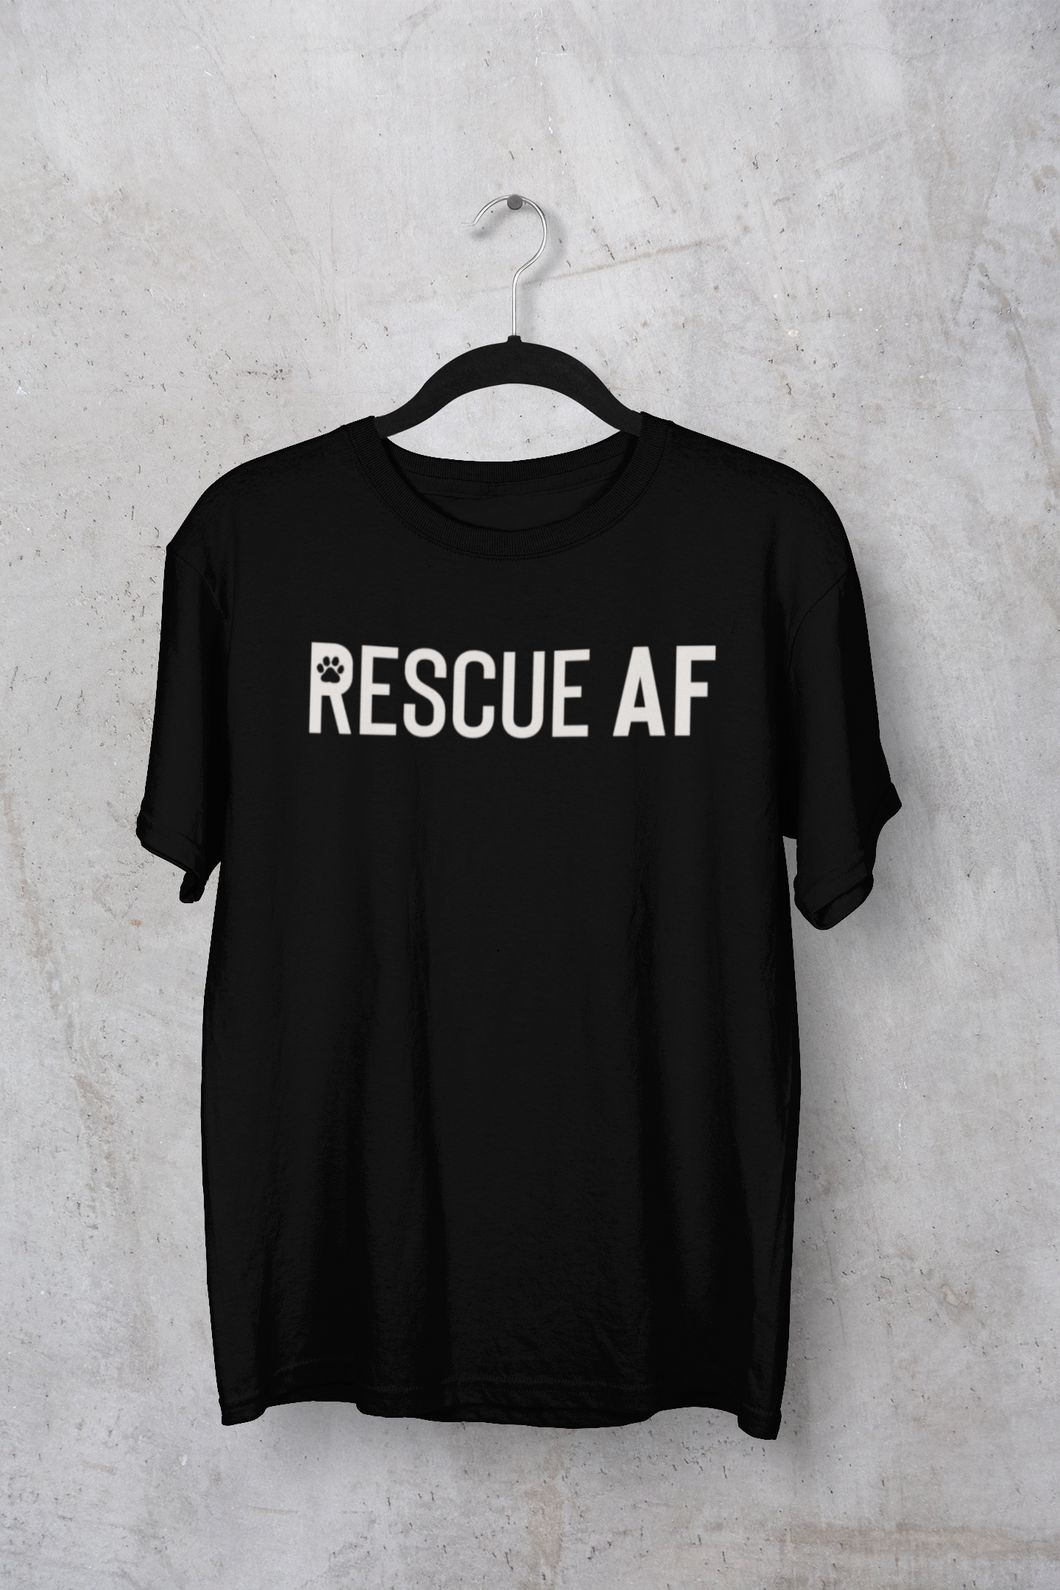 Rescue AF Men's/Unisex or Women's T-shirt